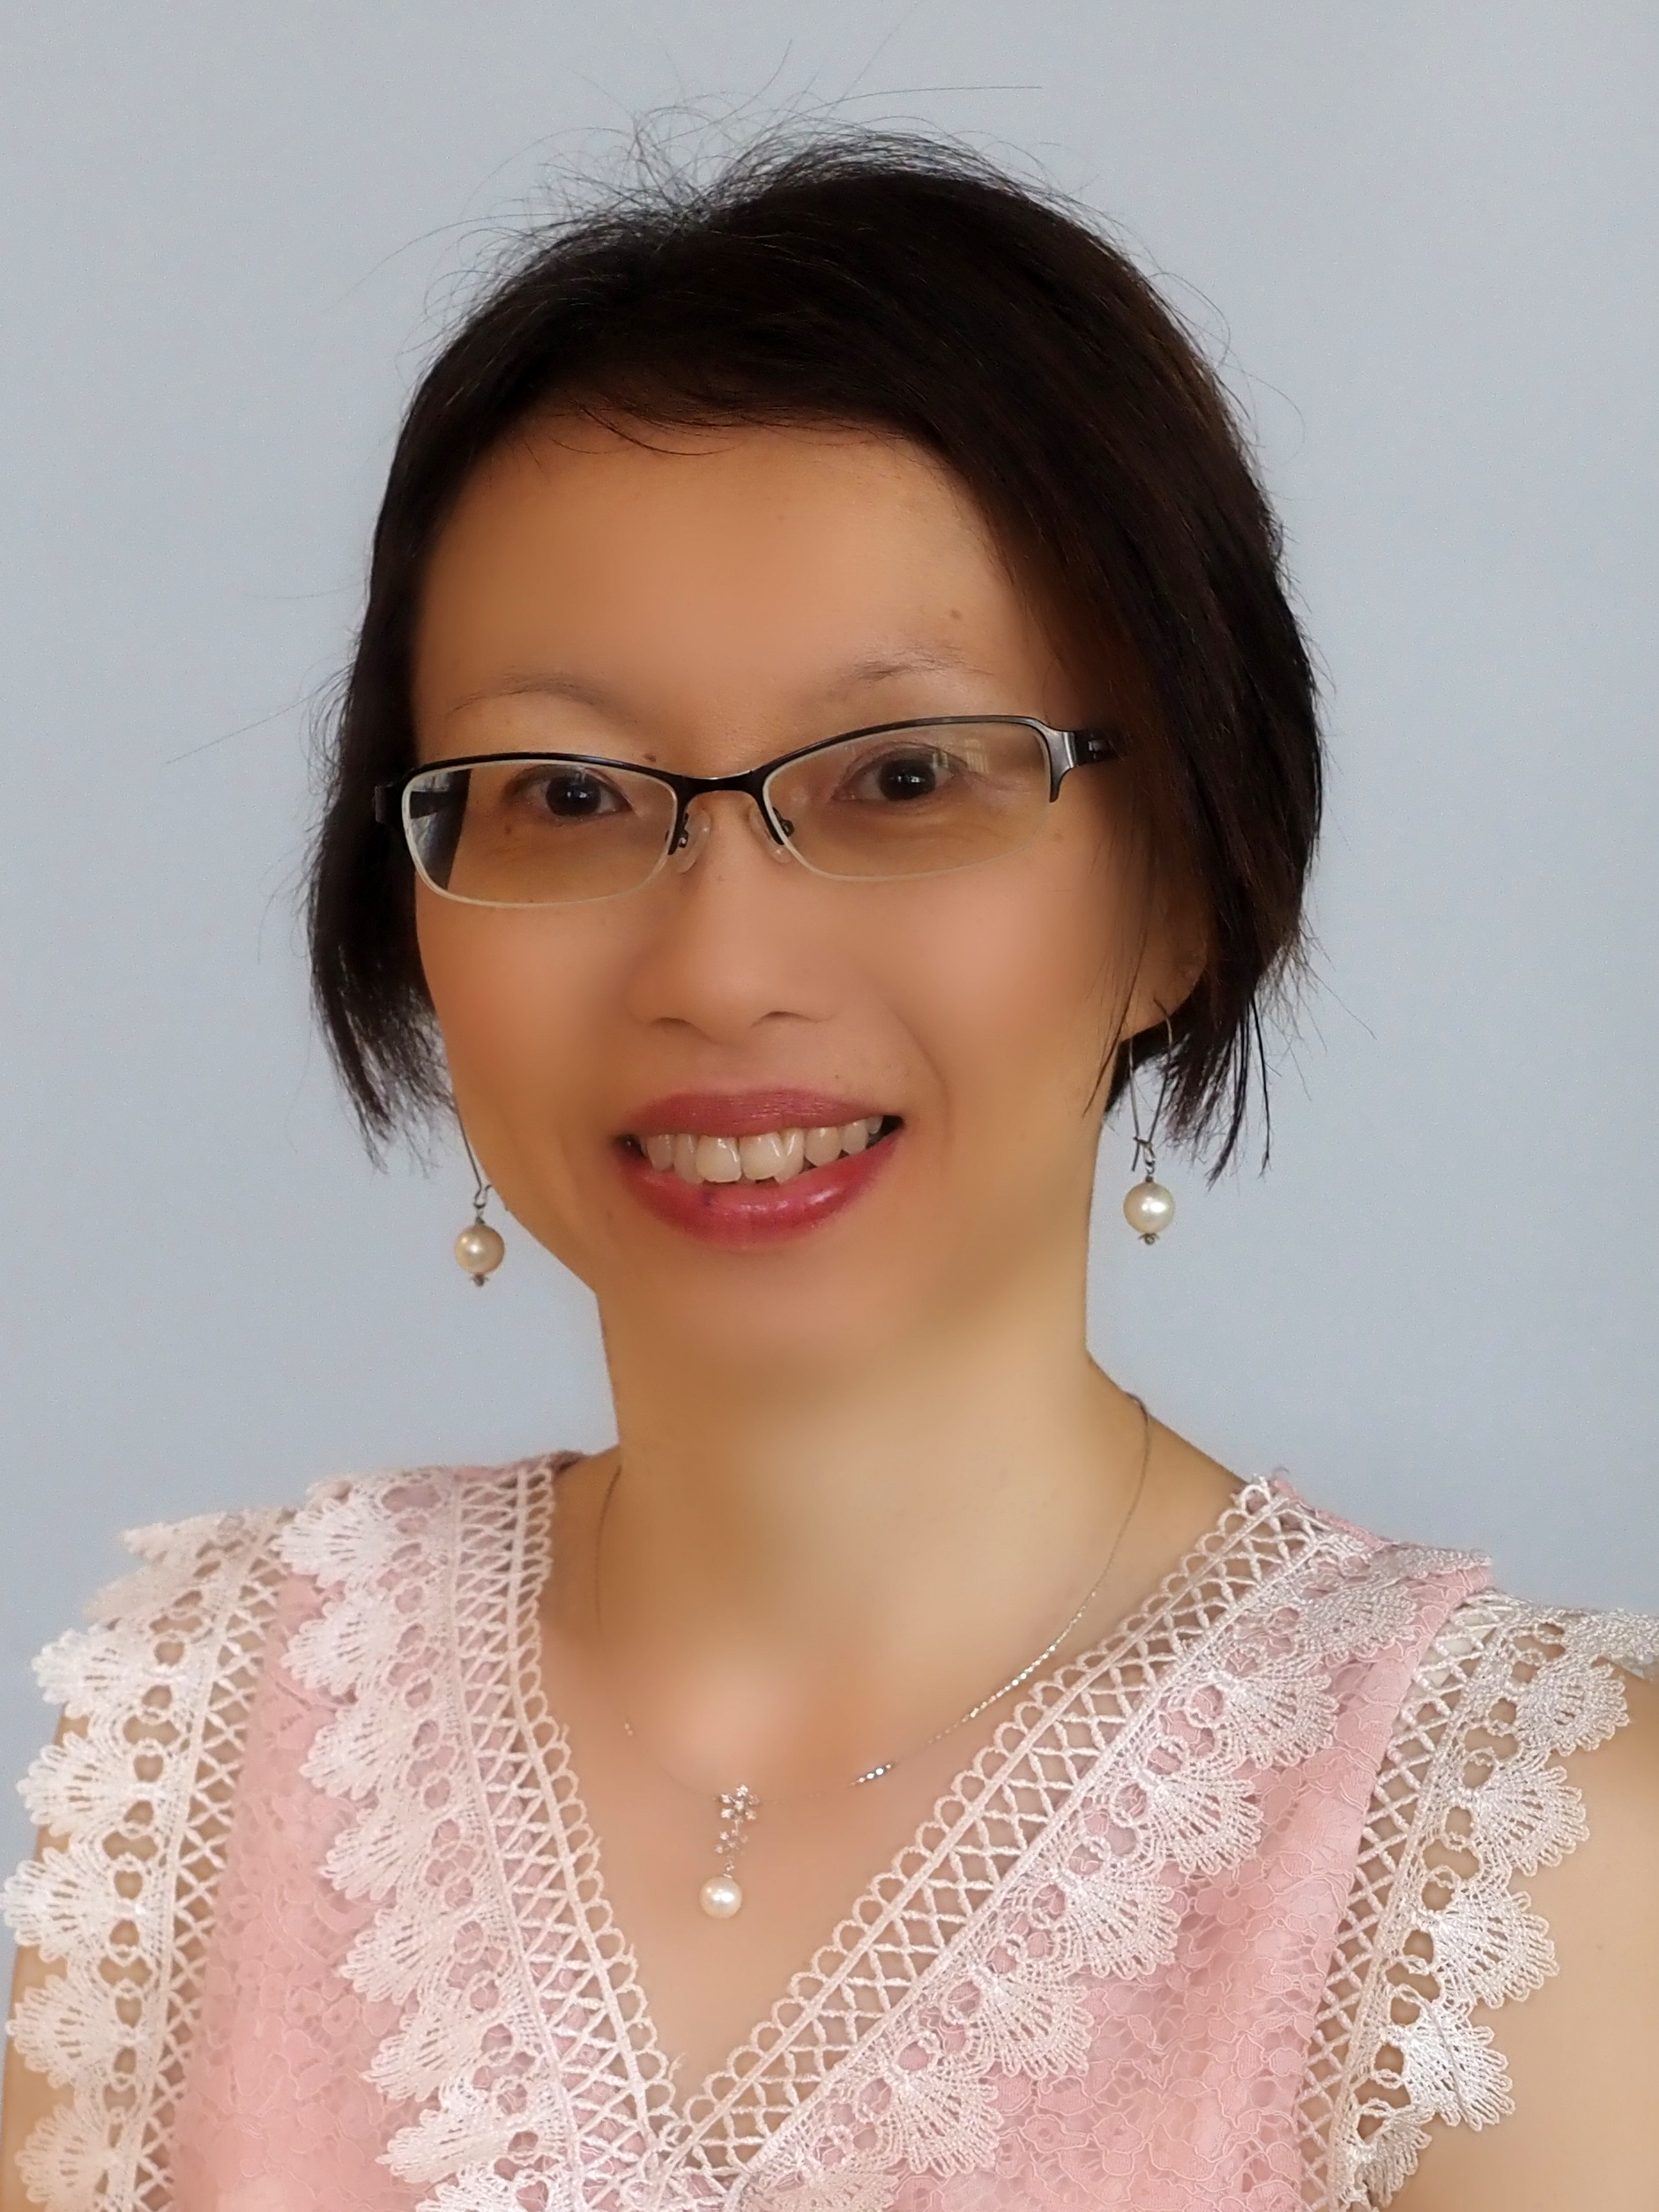 Associate Professor Angela Chow